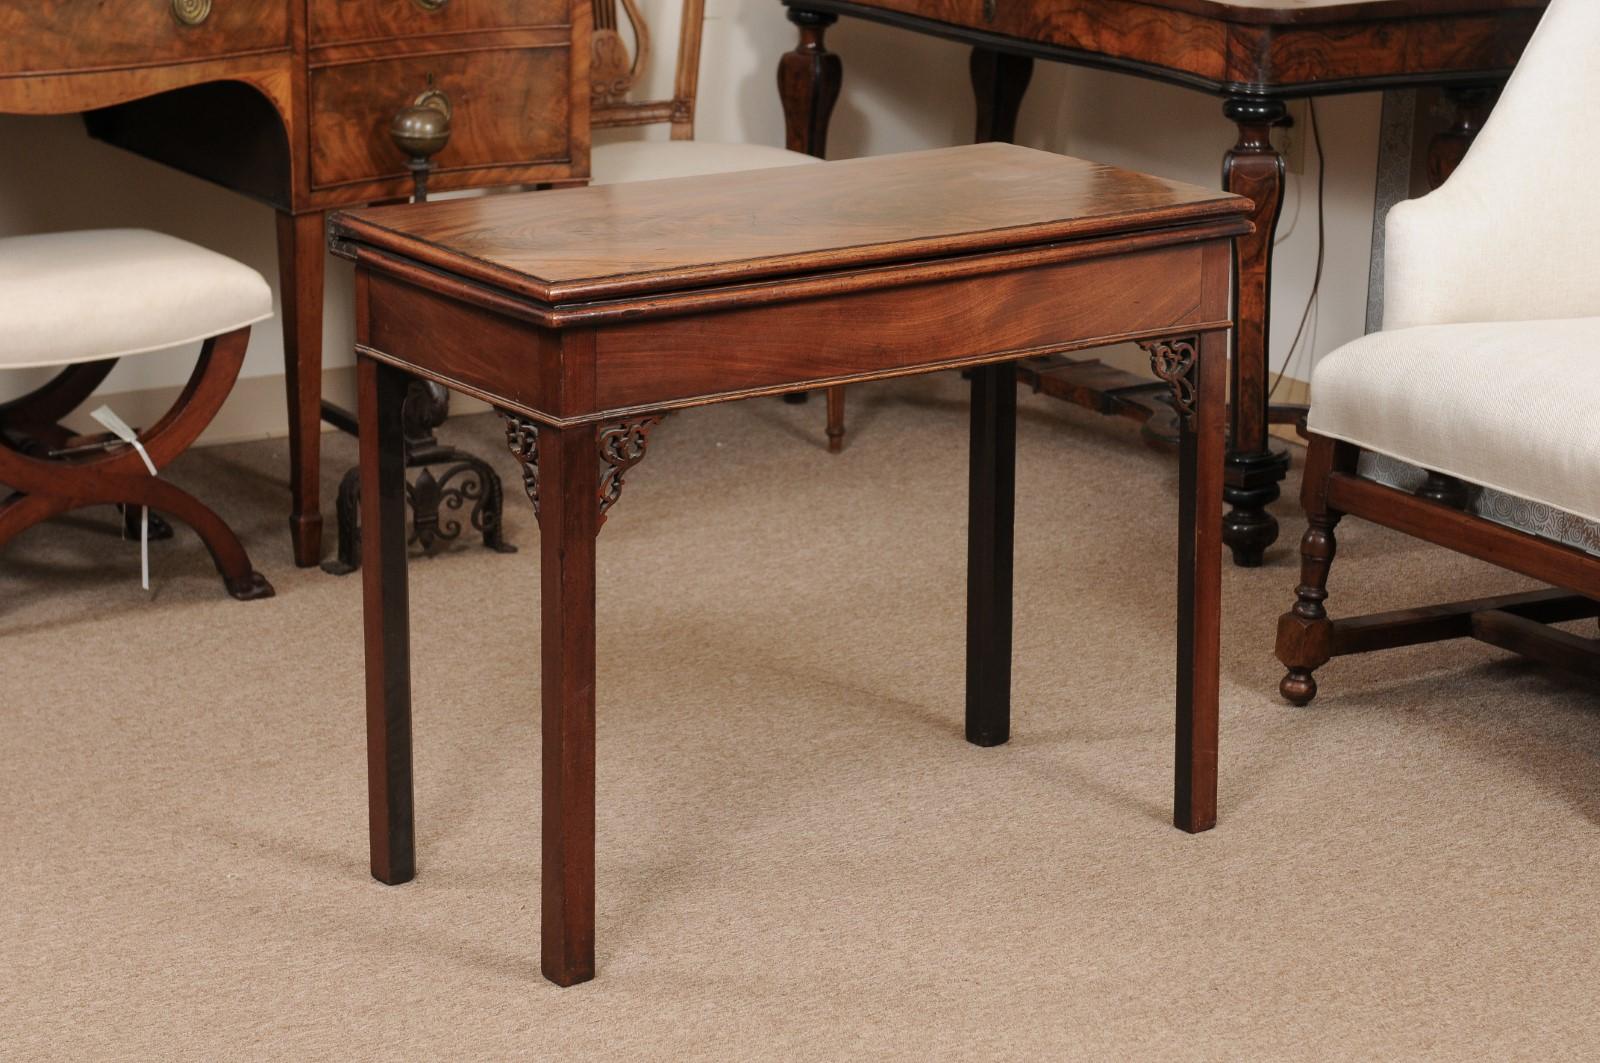 18th century English George II period flip-top tea table with fretwork.